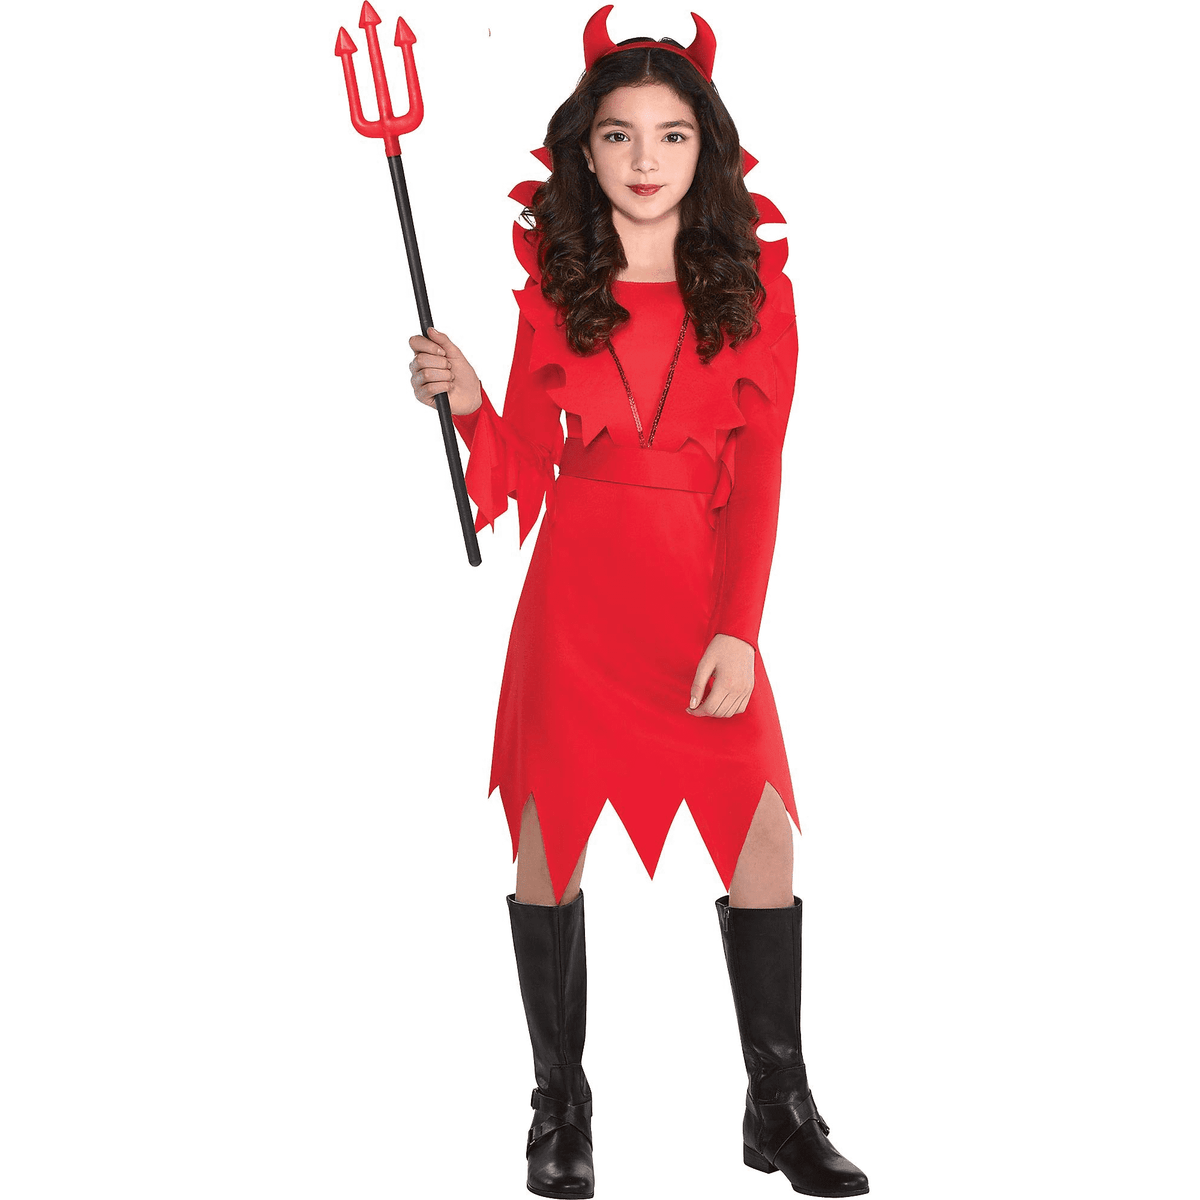 Amscan COSTUMES Toddler Girls Devious Devil Costume